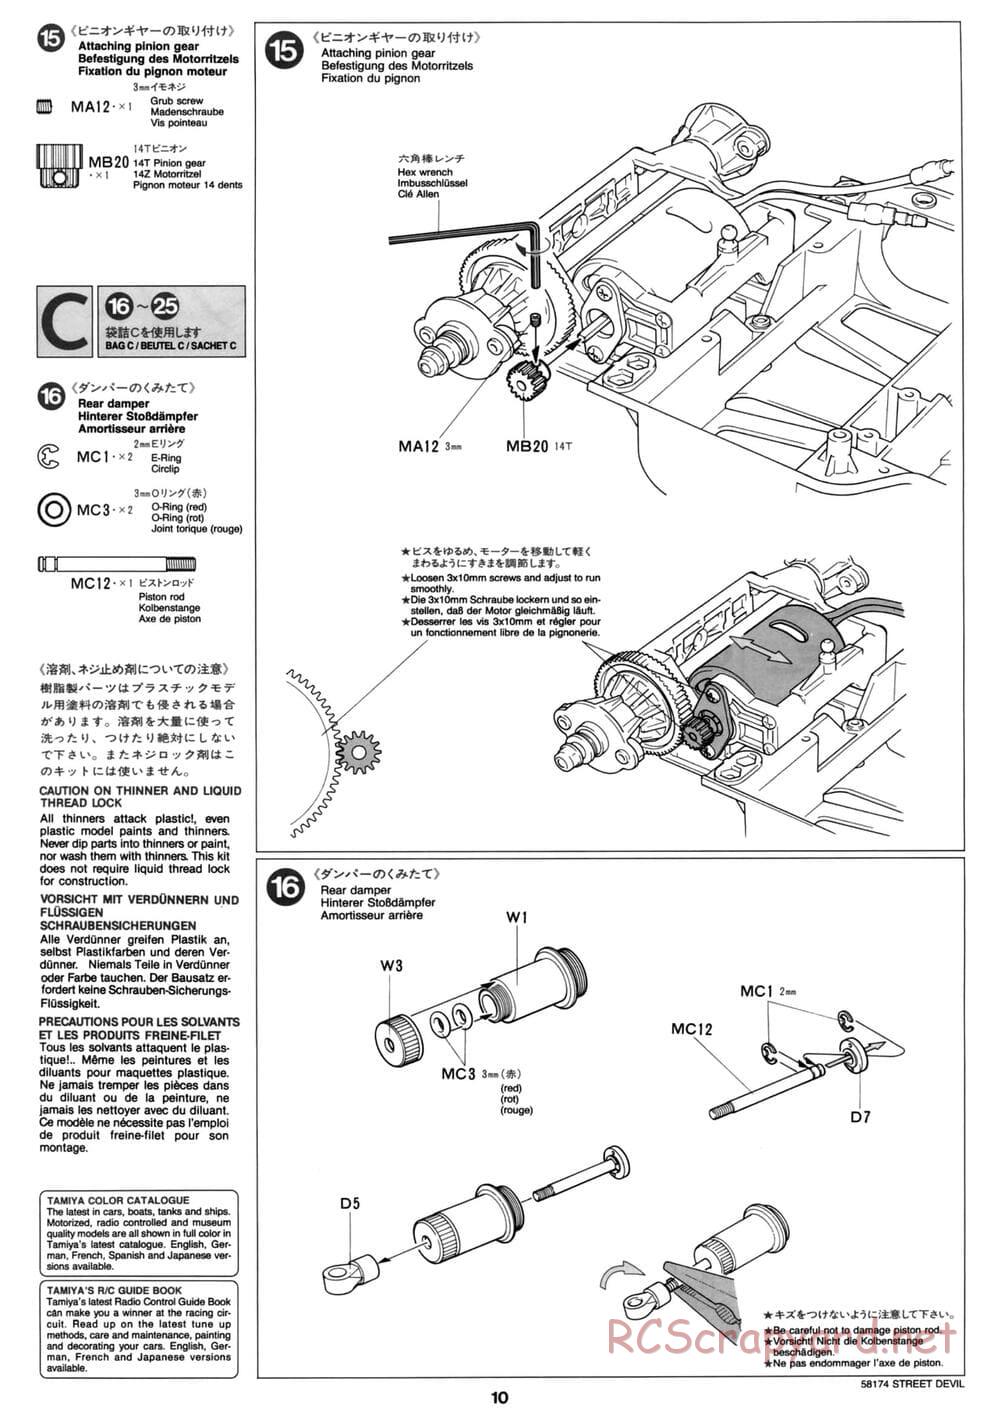 Tamiya - Street Devil - Group-C Chassis - Manual - Page 10